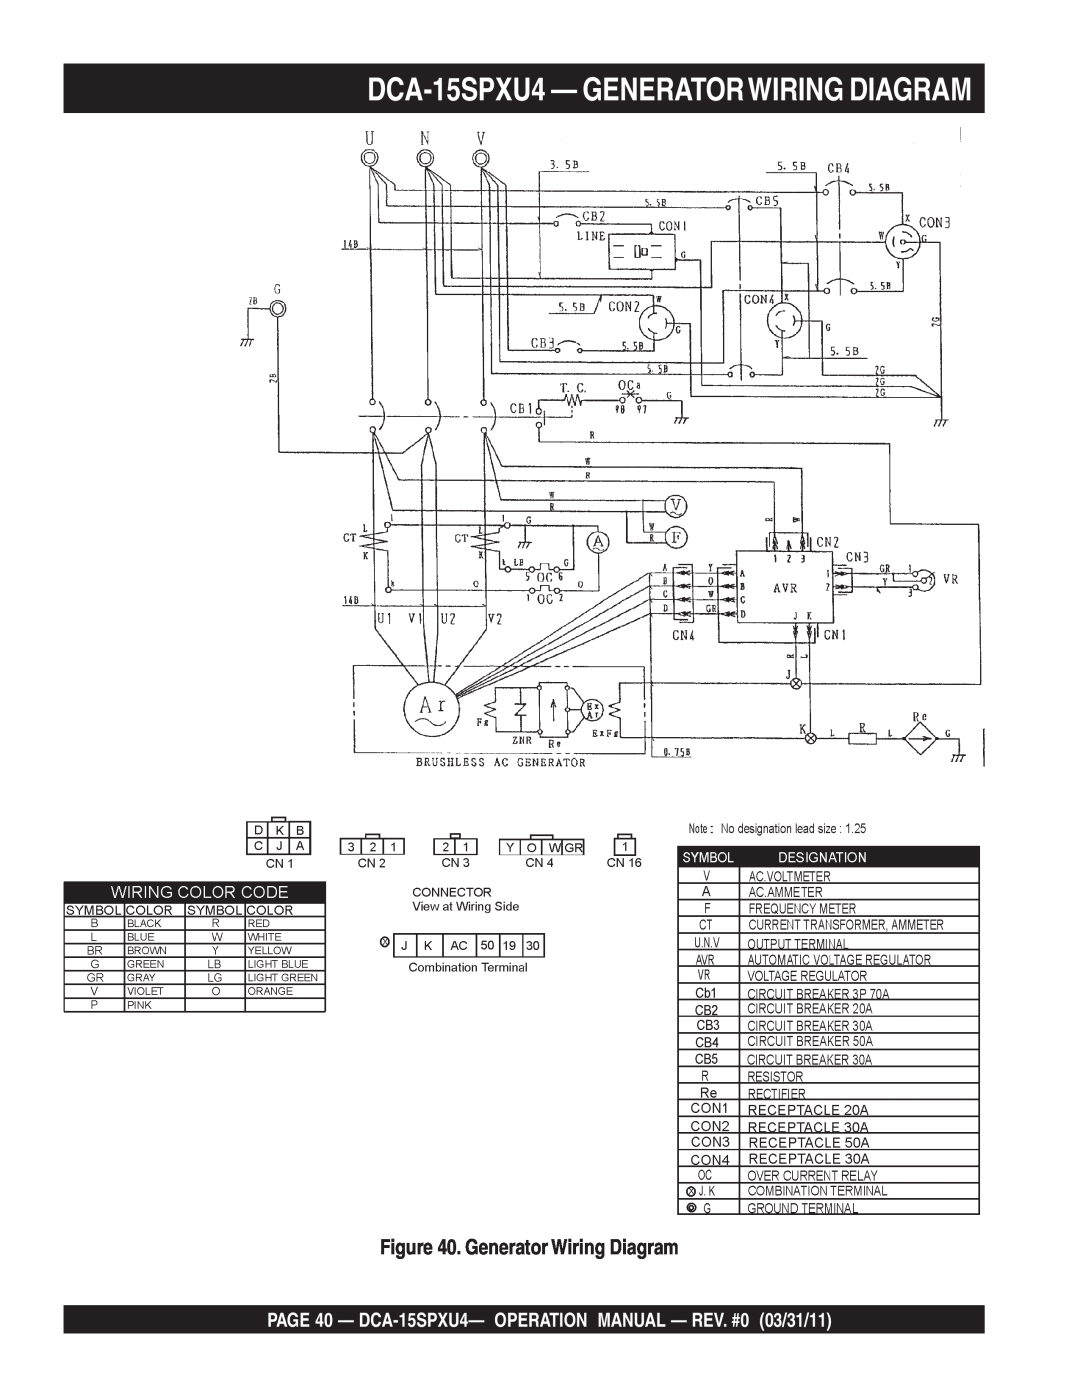 Multiquip operation manual DCA-15SPXU4- GENERATORWIRING DIAGRAM, Generator Wiring Diagram 